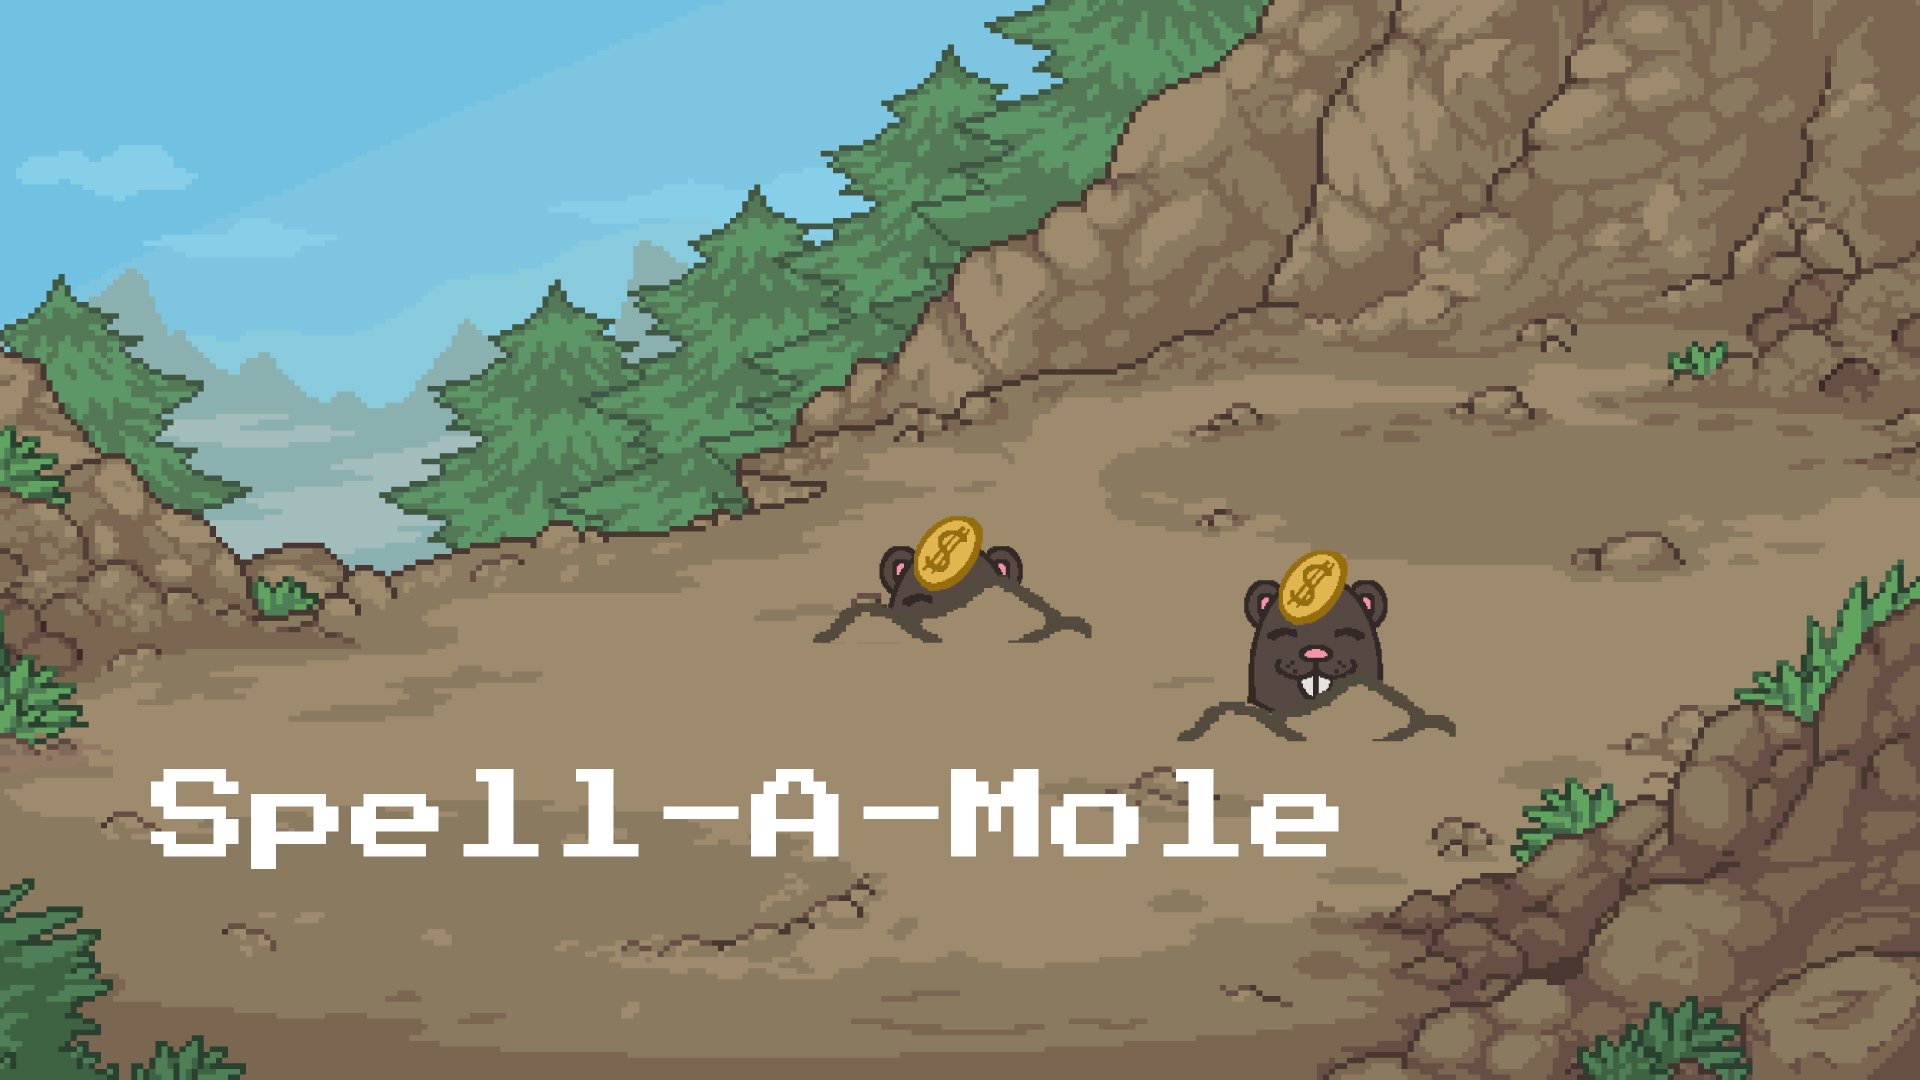 Spell-A-Mole